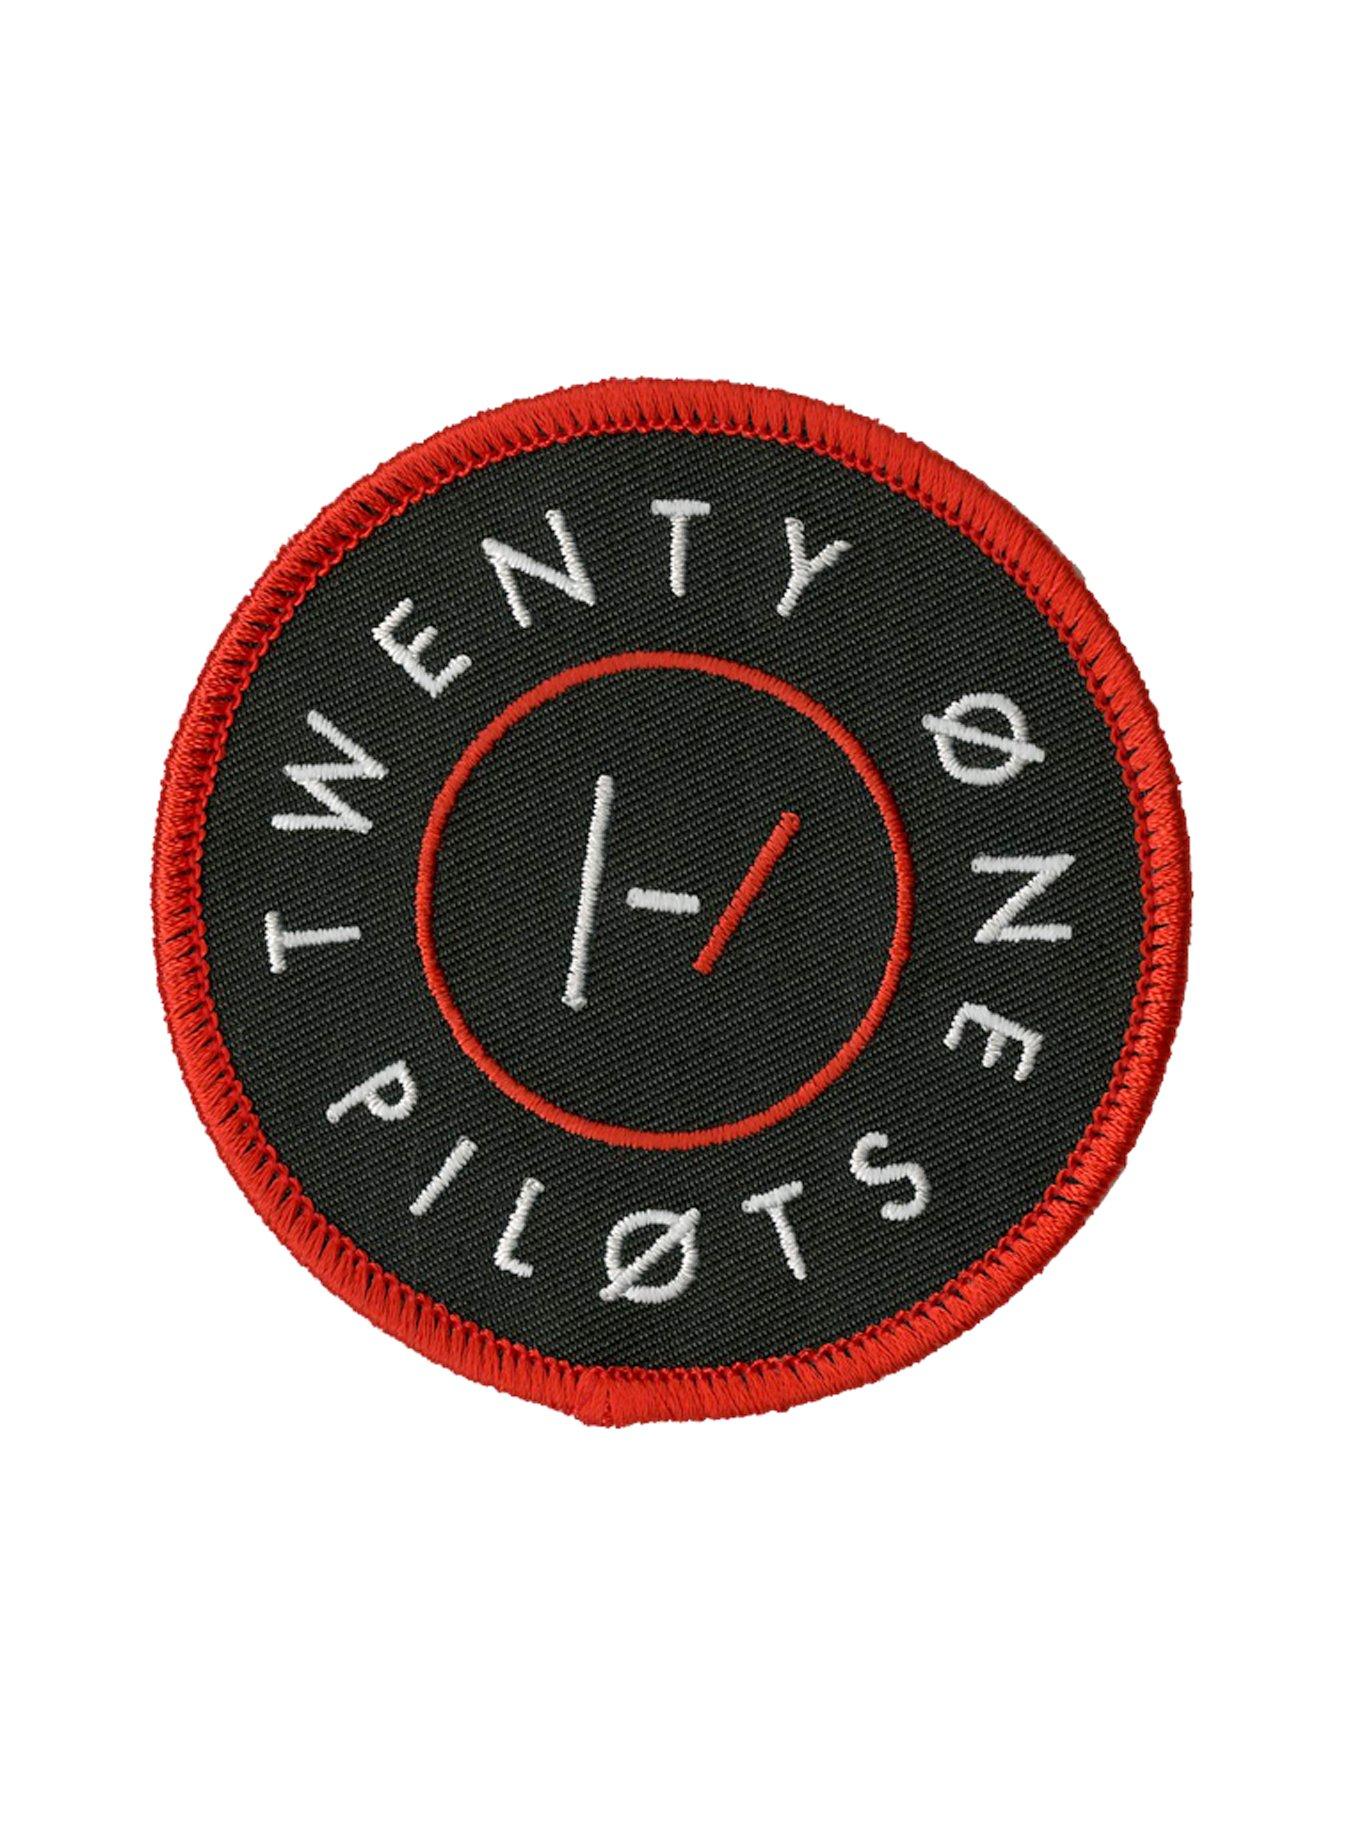 Twenty One Pilots Circle Logo IronOn Patch Hot Topic